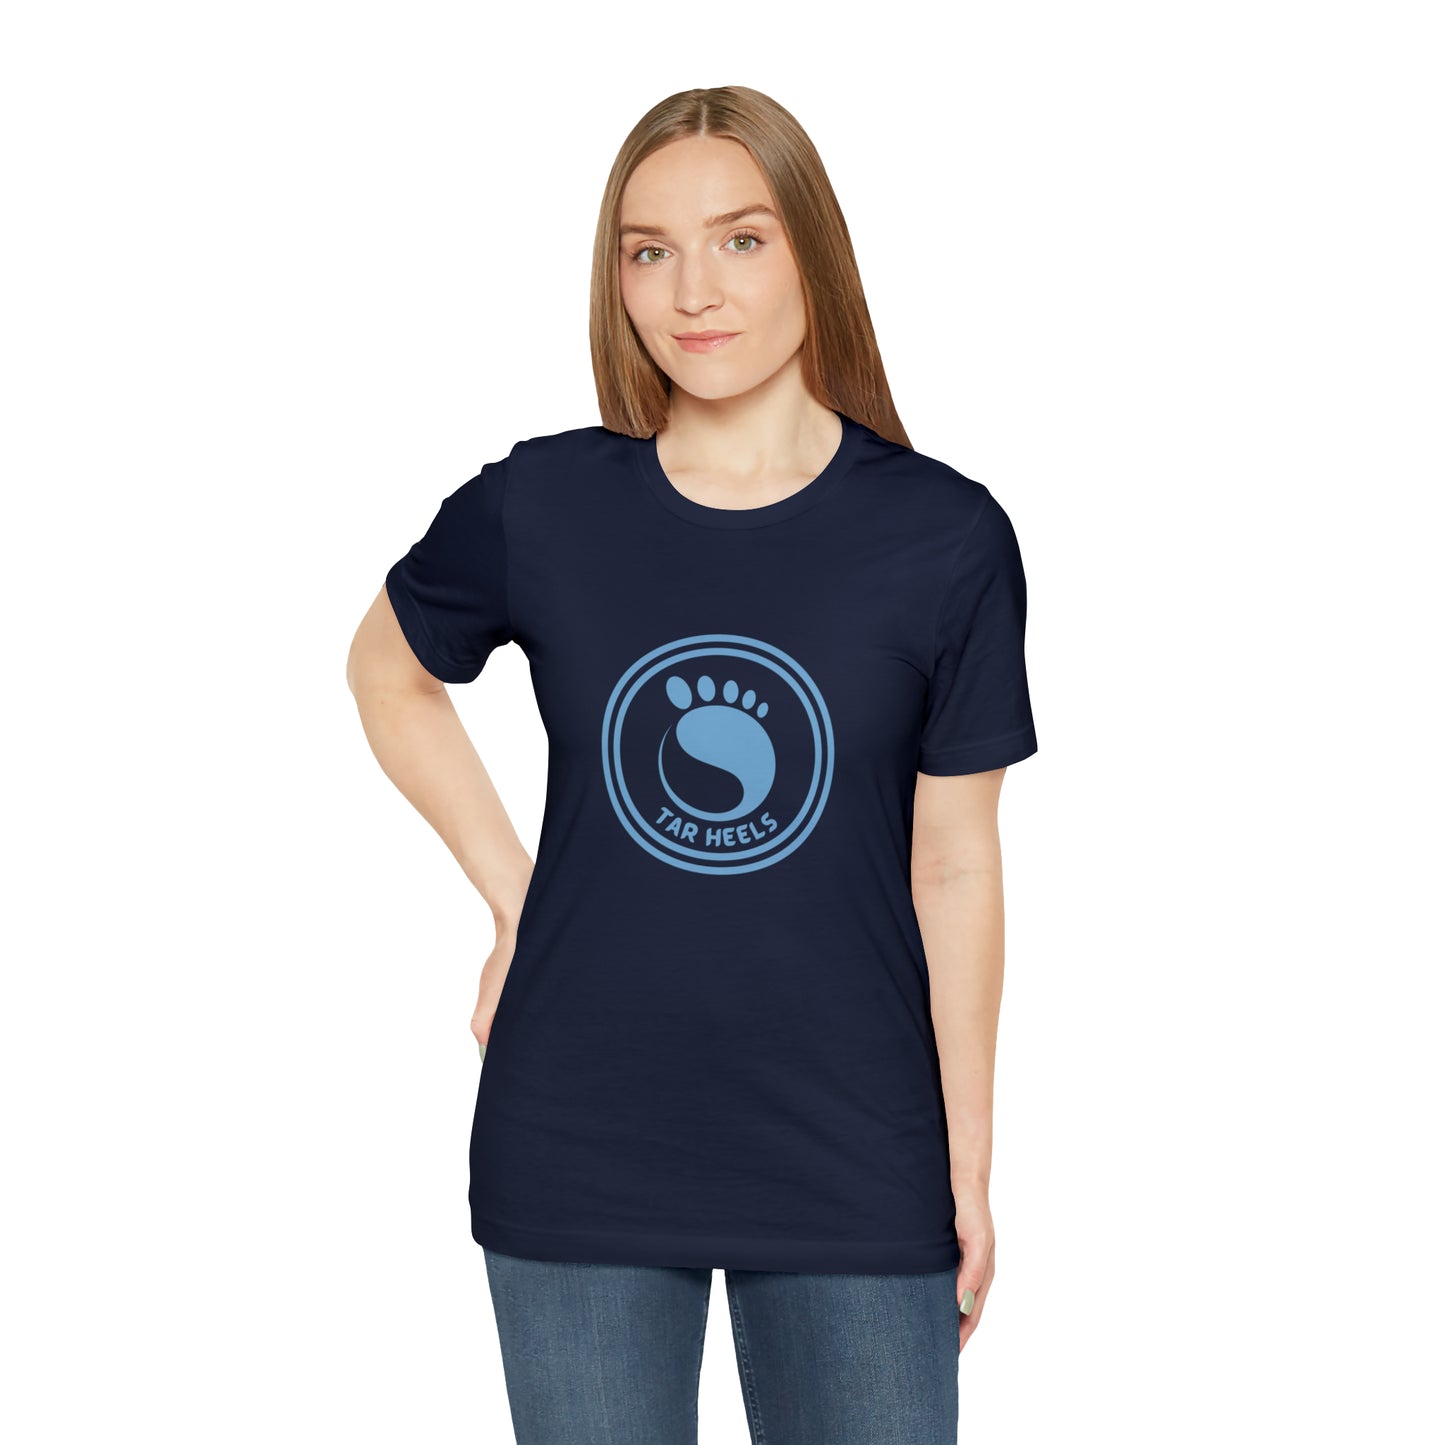 Schools, University of North Carolina at Chapel Hill, Tar Heels- Adult, Regular Fit, Soft Cotton, T-shirt